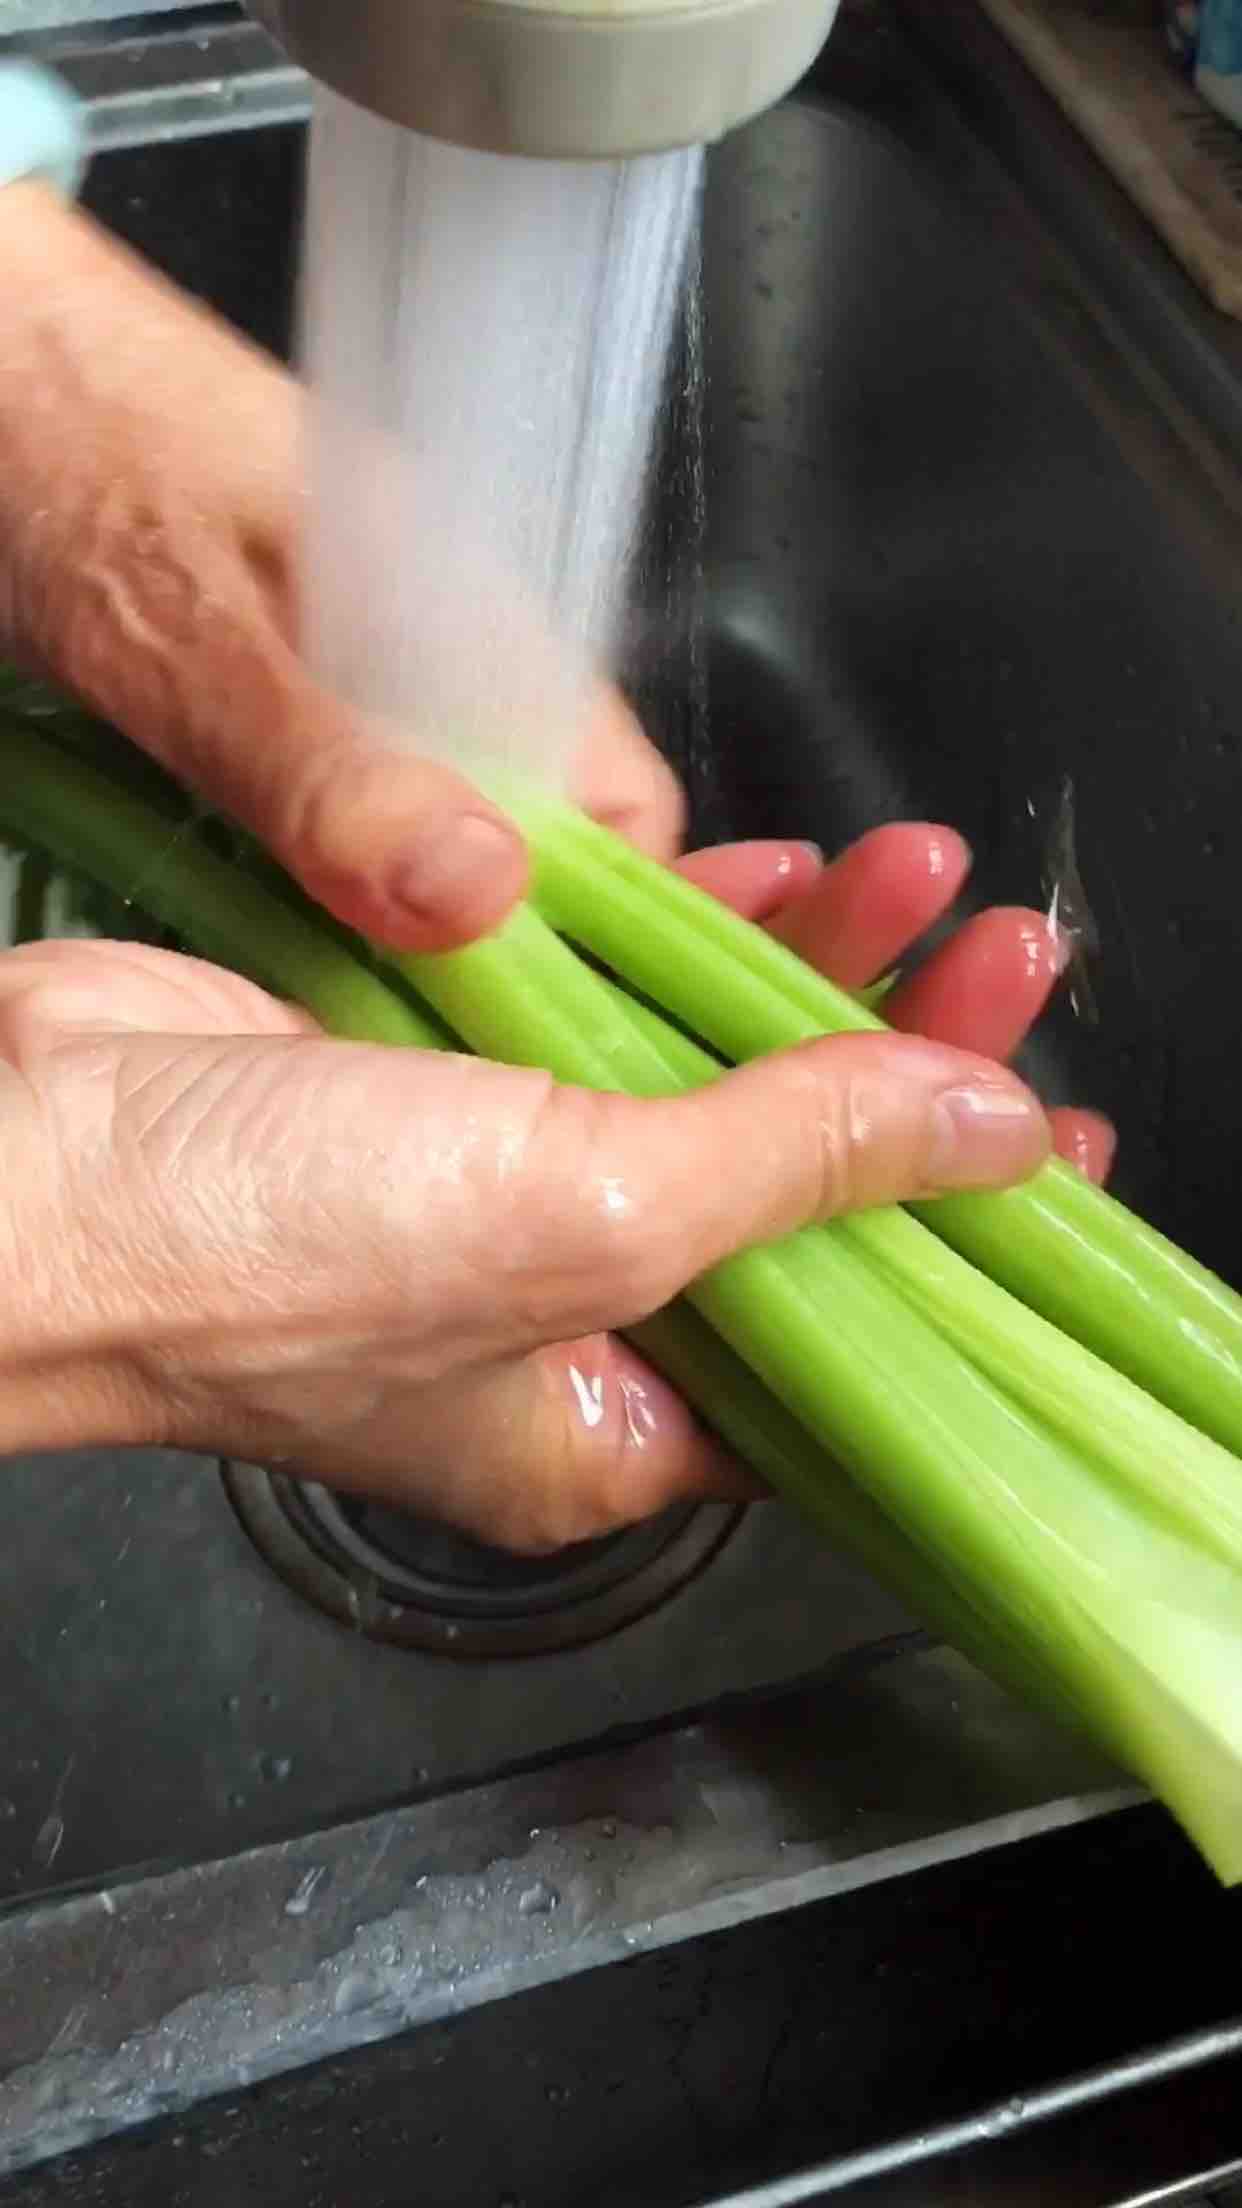 Celery Mixed with Black Fungus recipe